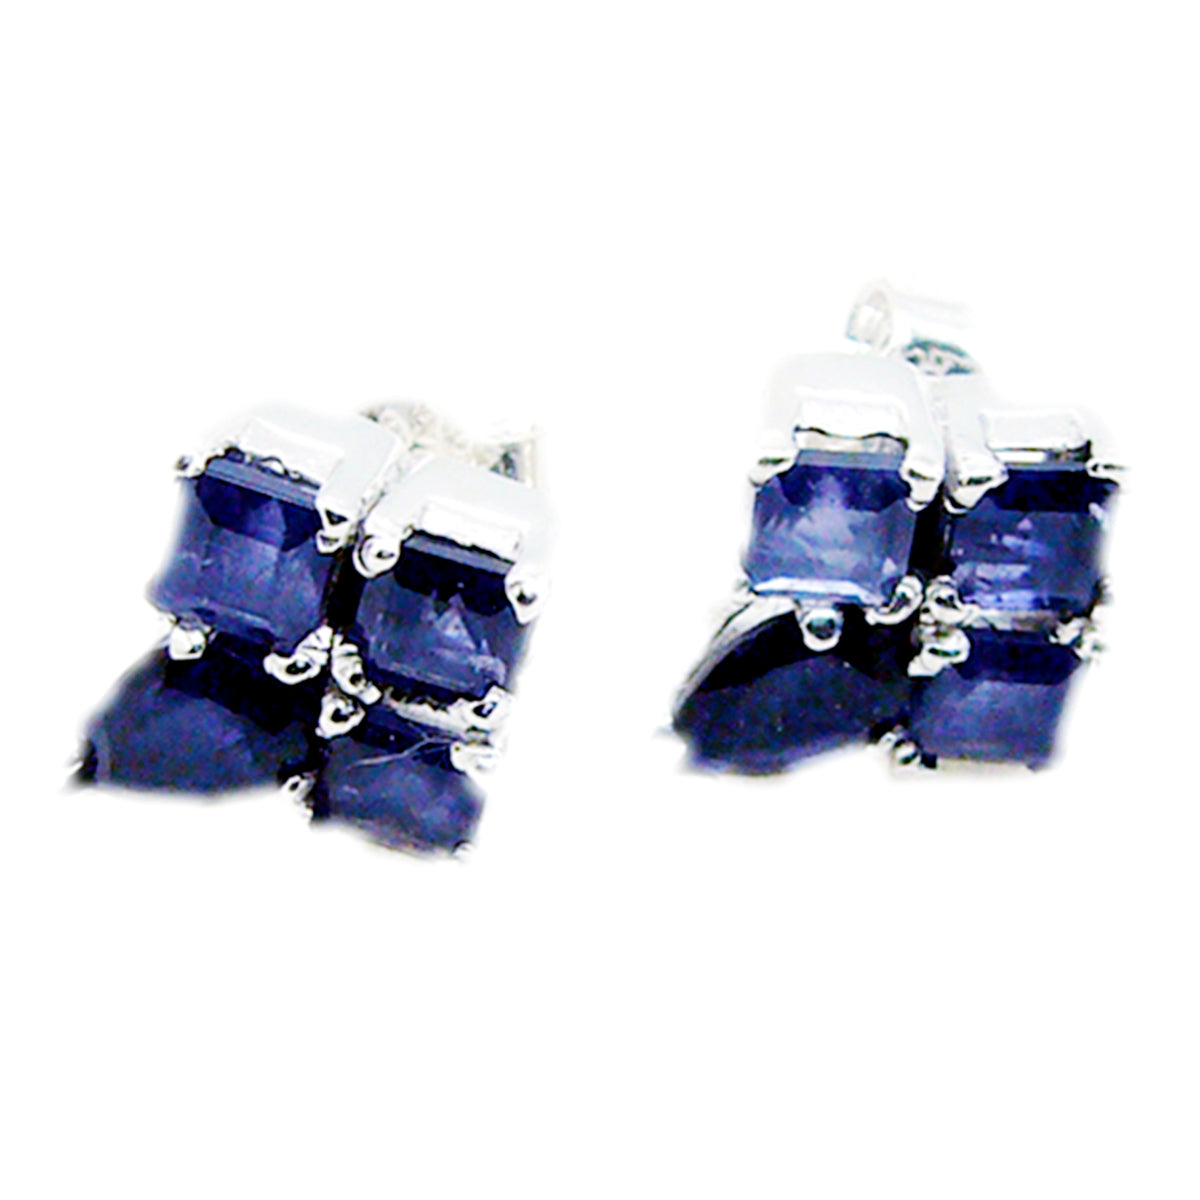 Riyo Good Gemstones multi shape Faceted Nevy Blue Iolite Silver Earring gift for women